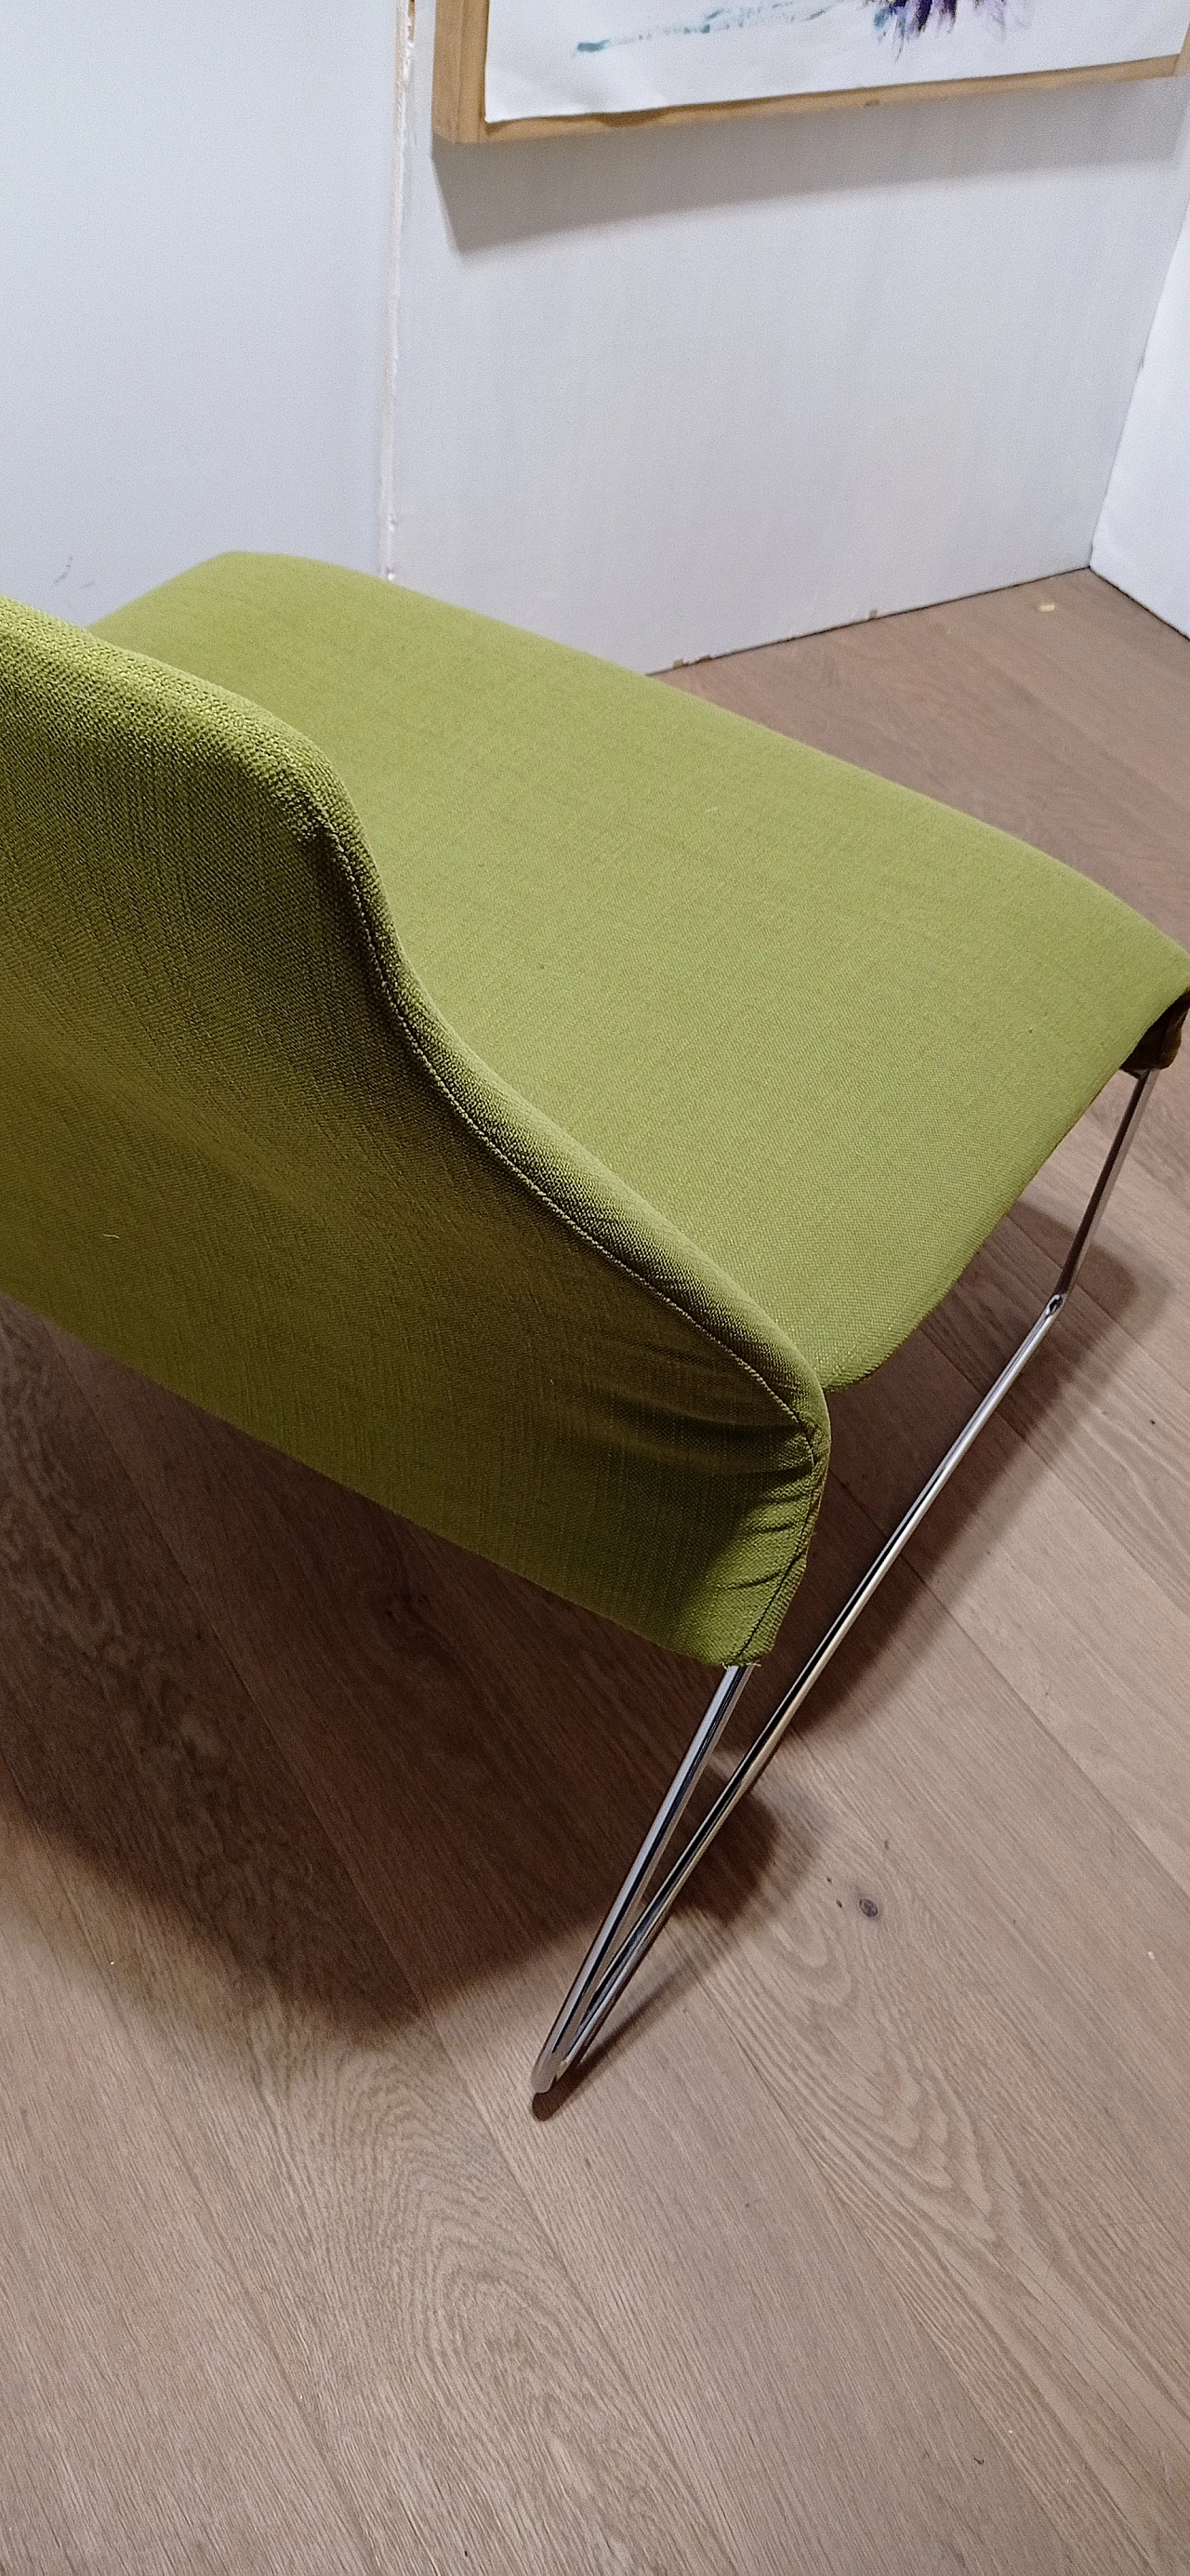 Lazy 05 armchair in melange fabric by P. Urquiola for B&B Italia 73